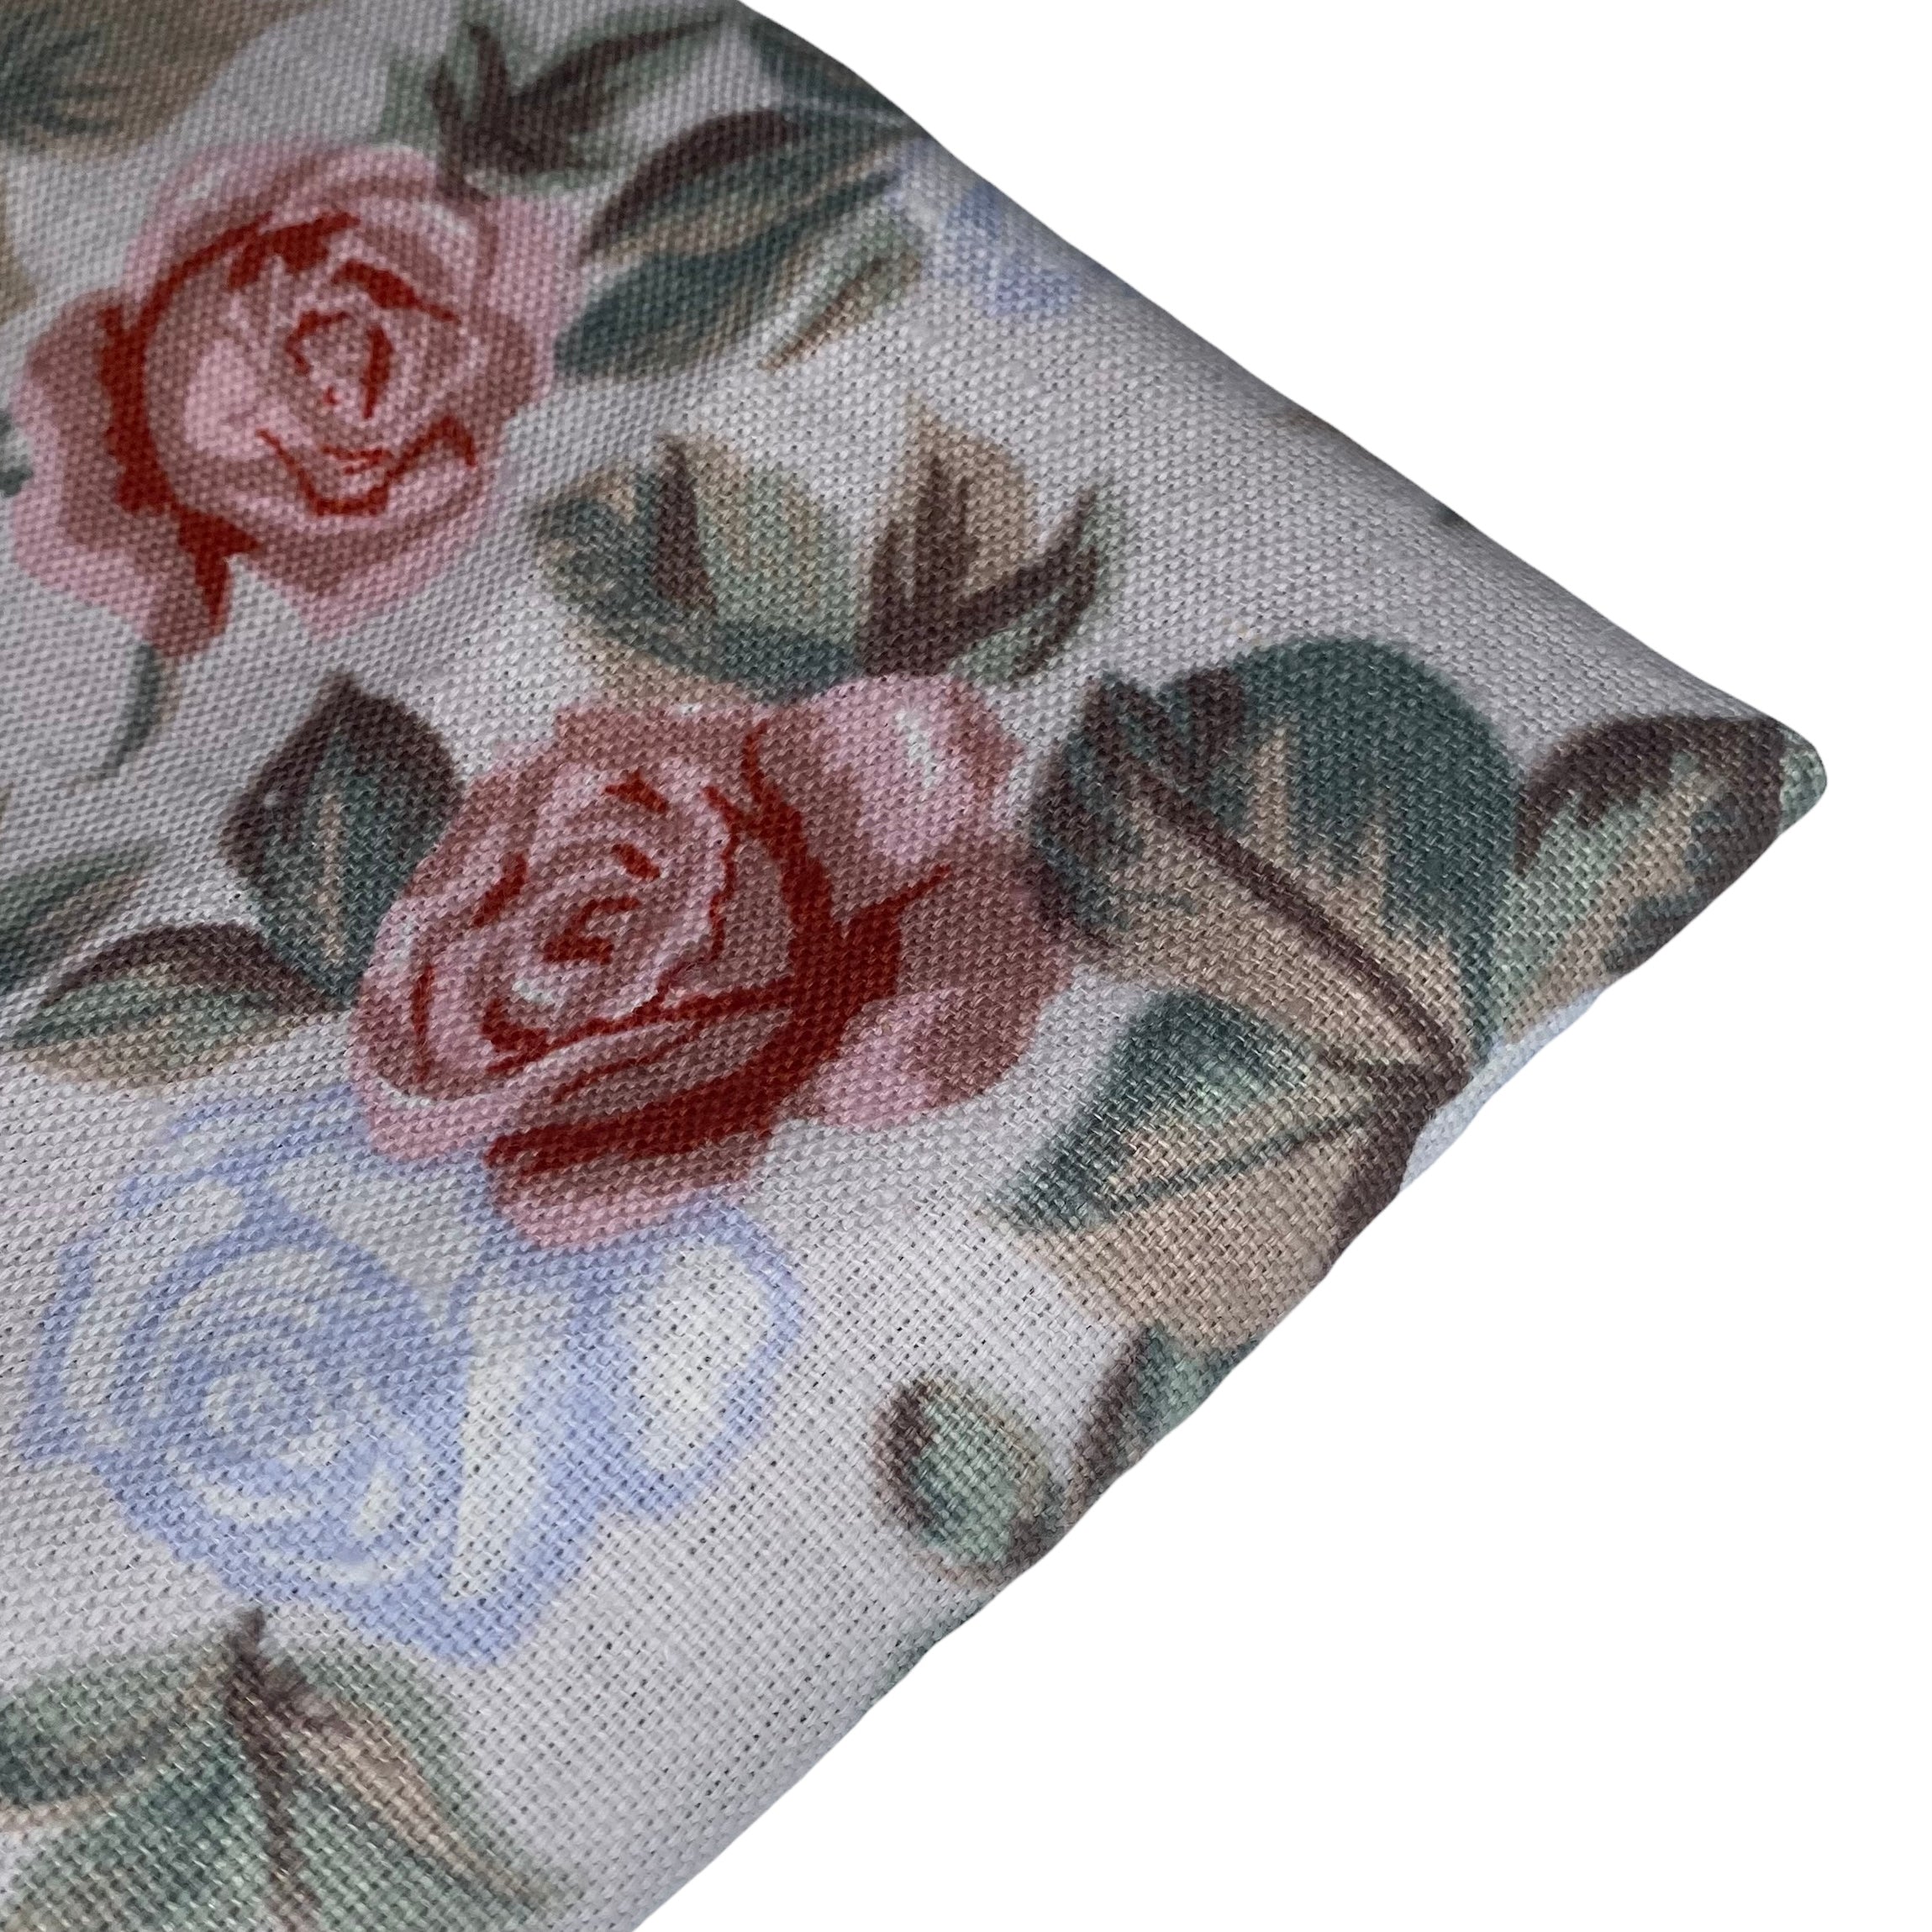 Printed Linen - Floral - Pink/Blue